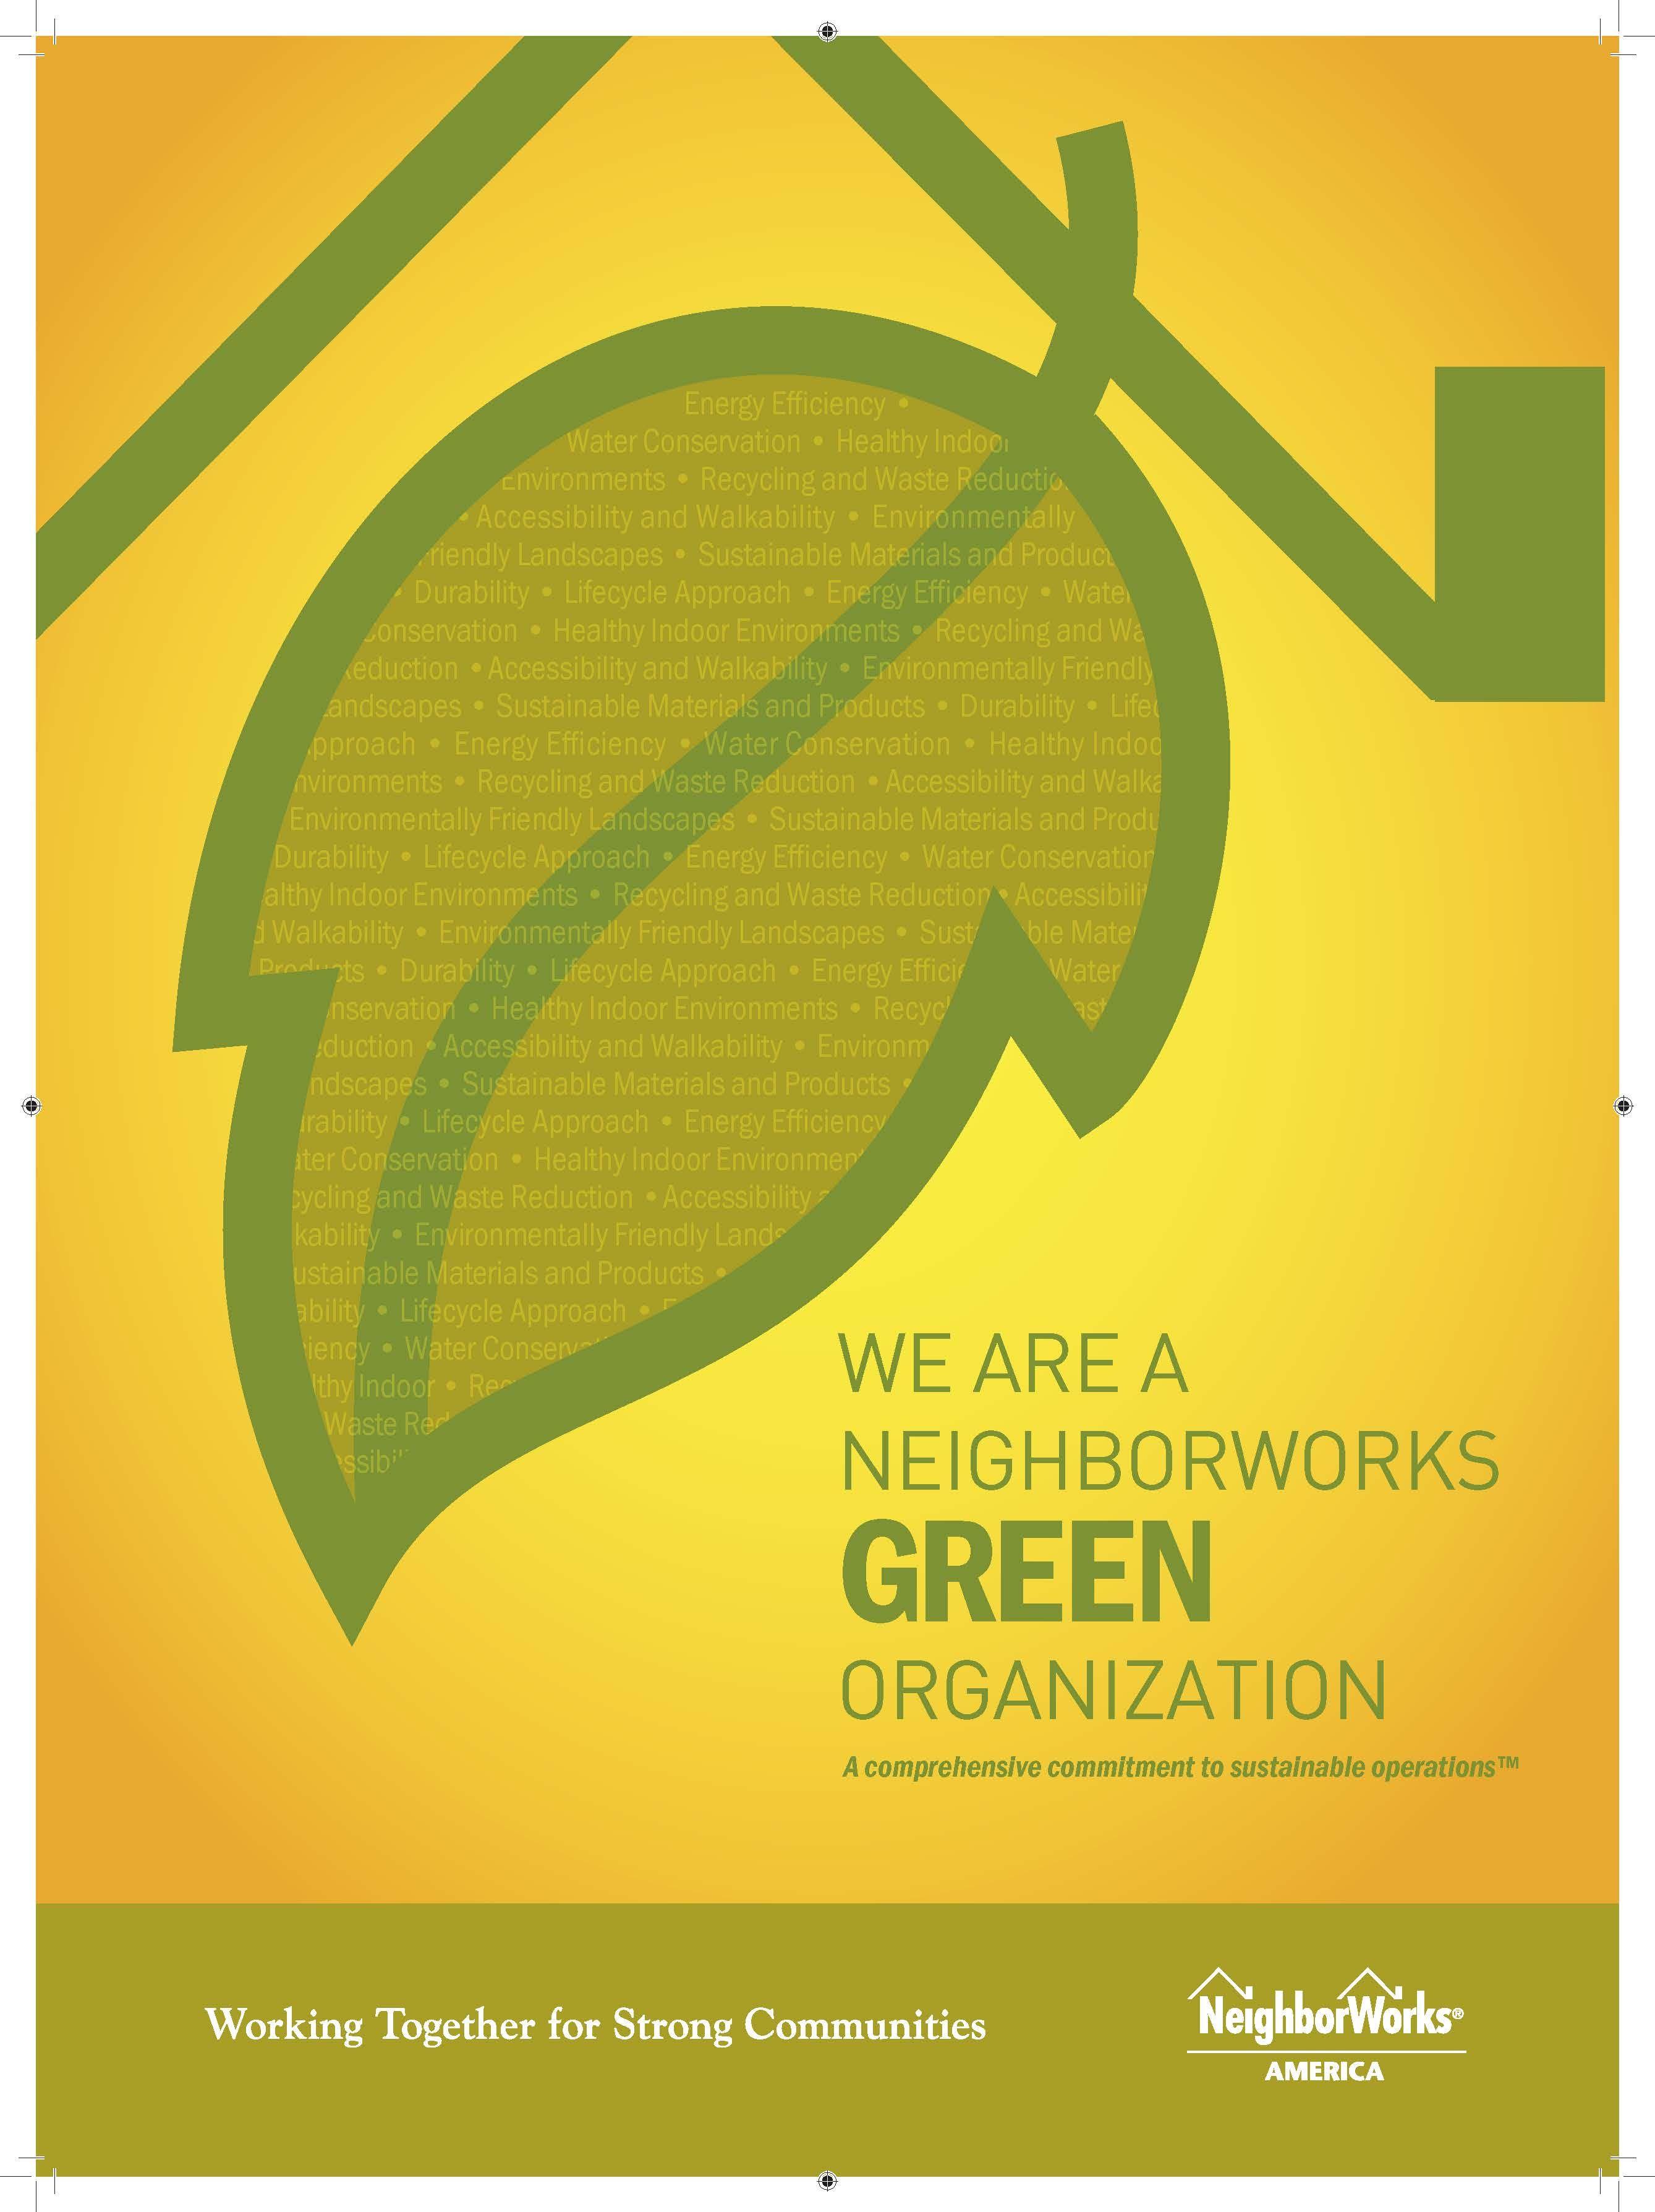 NeighborWorks Green Organization Logo - Southern Mutual Help Association, Inc